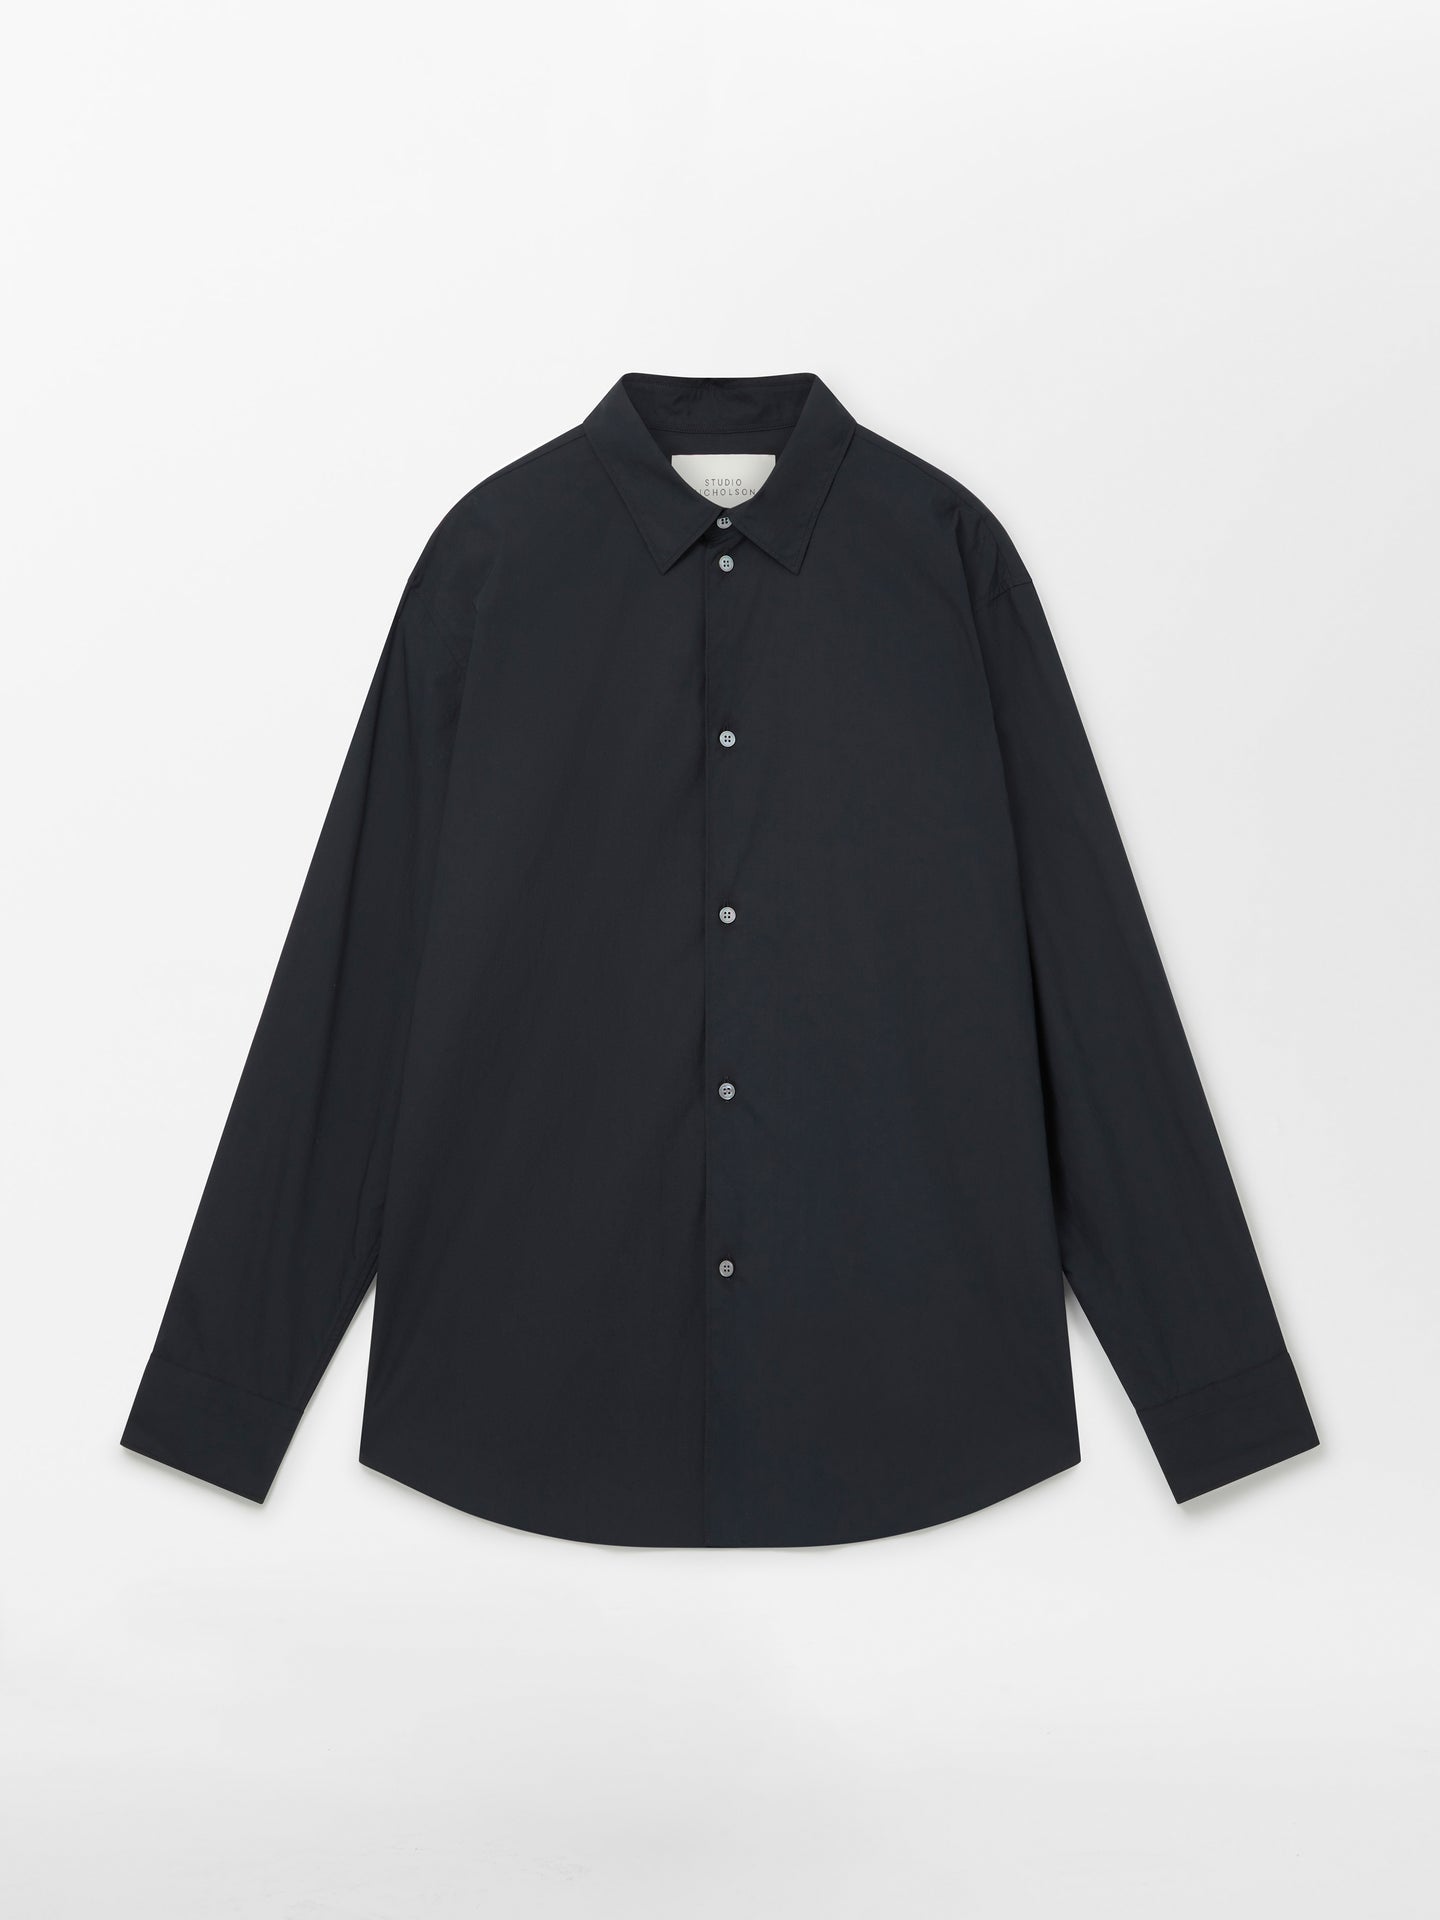 Mens Shirts | Capsule Wardrobe Staples For Work & Leisure– Studio Nicholson